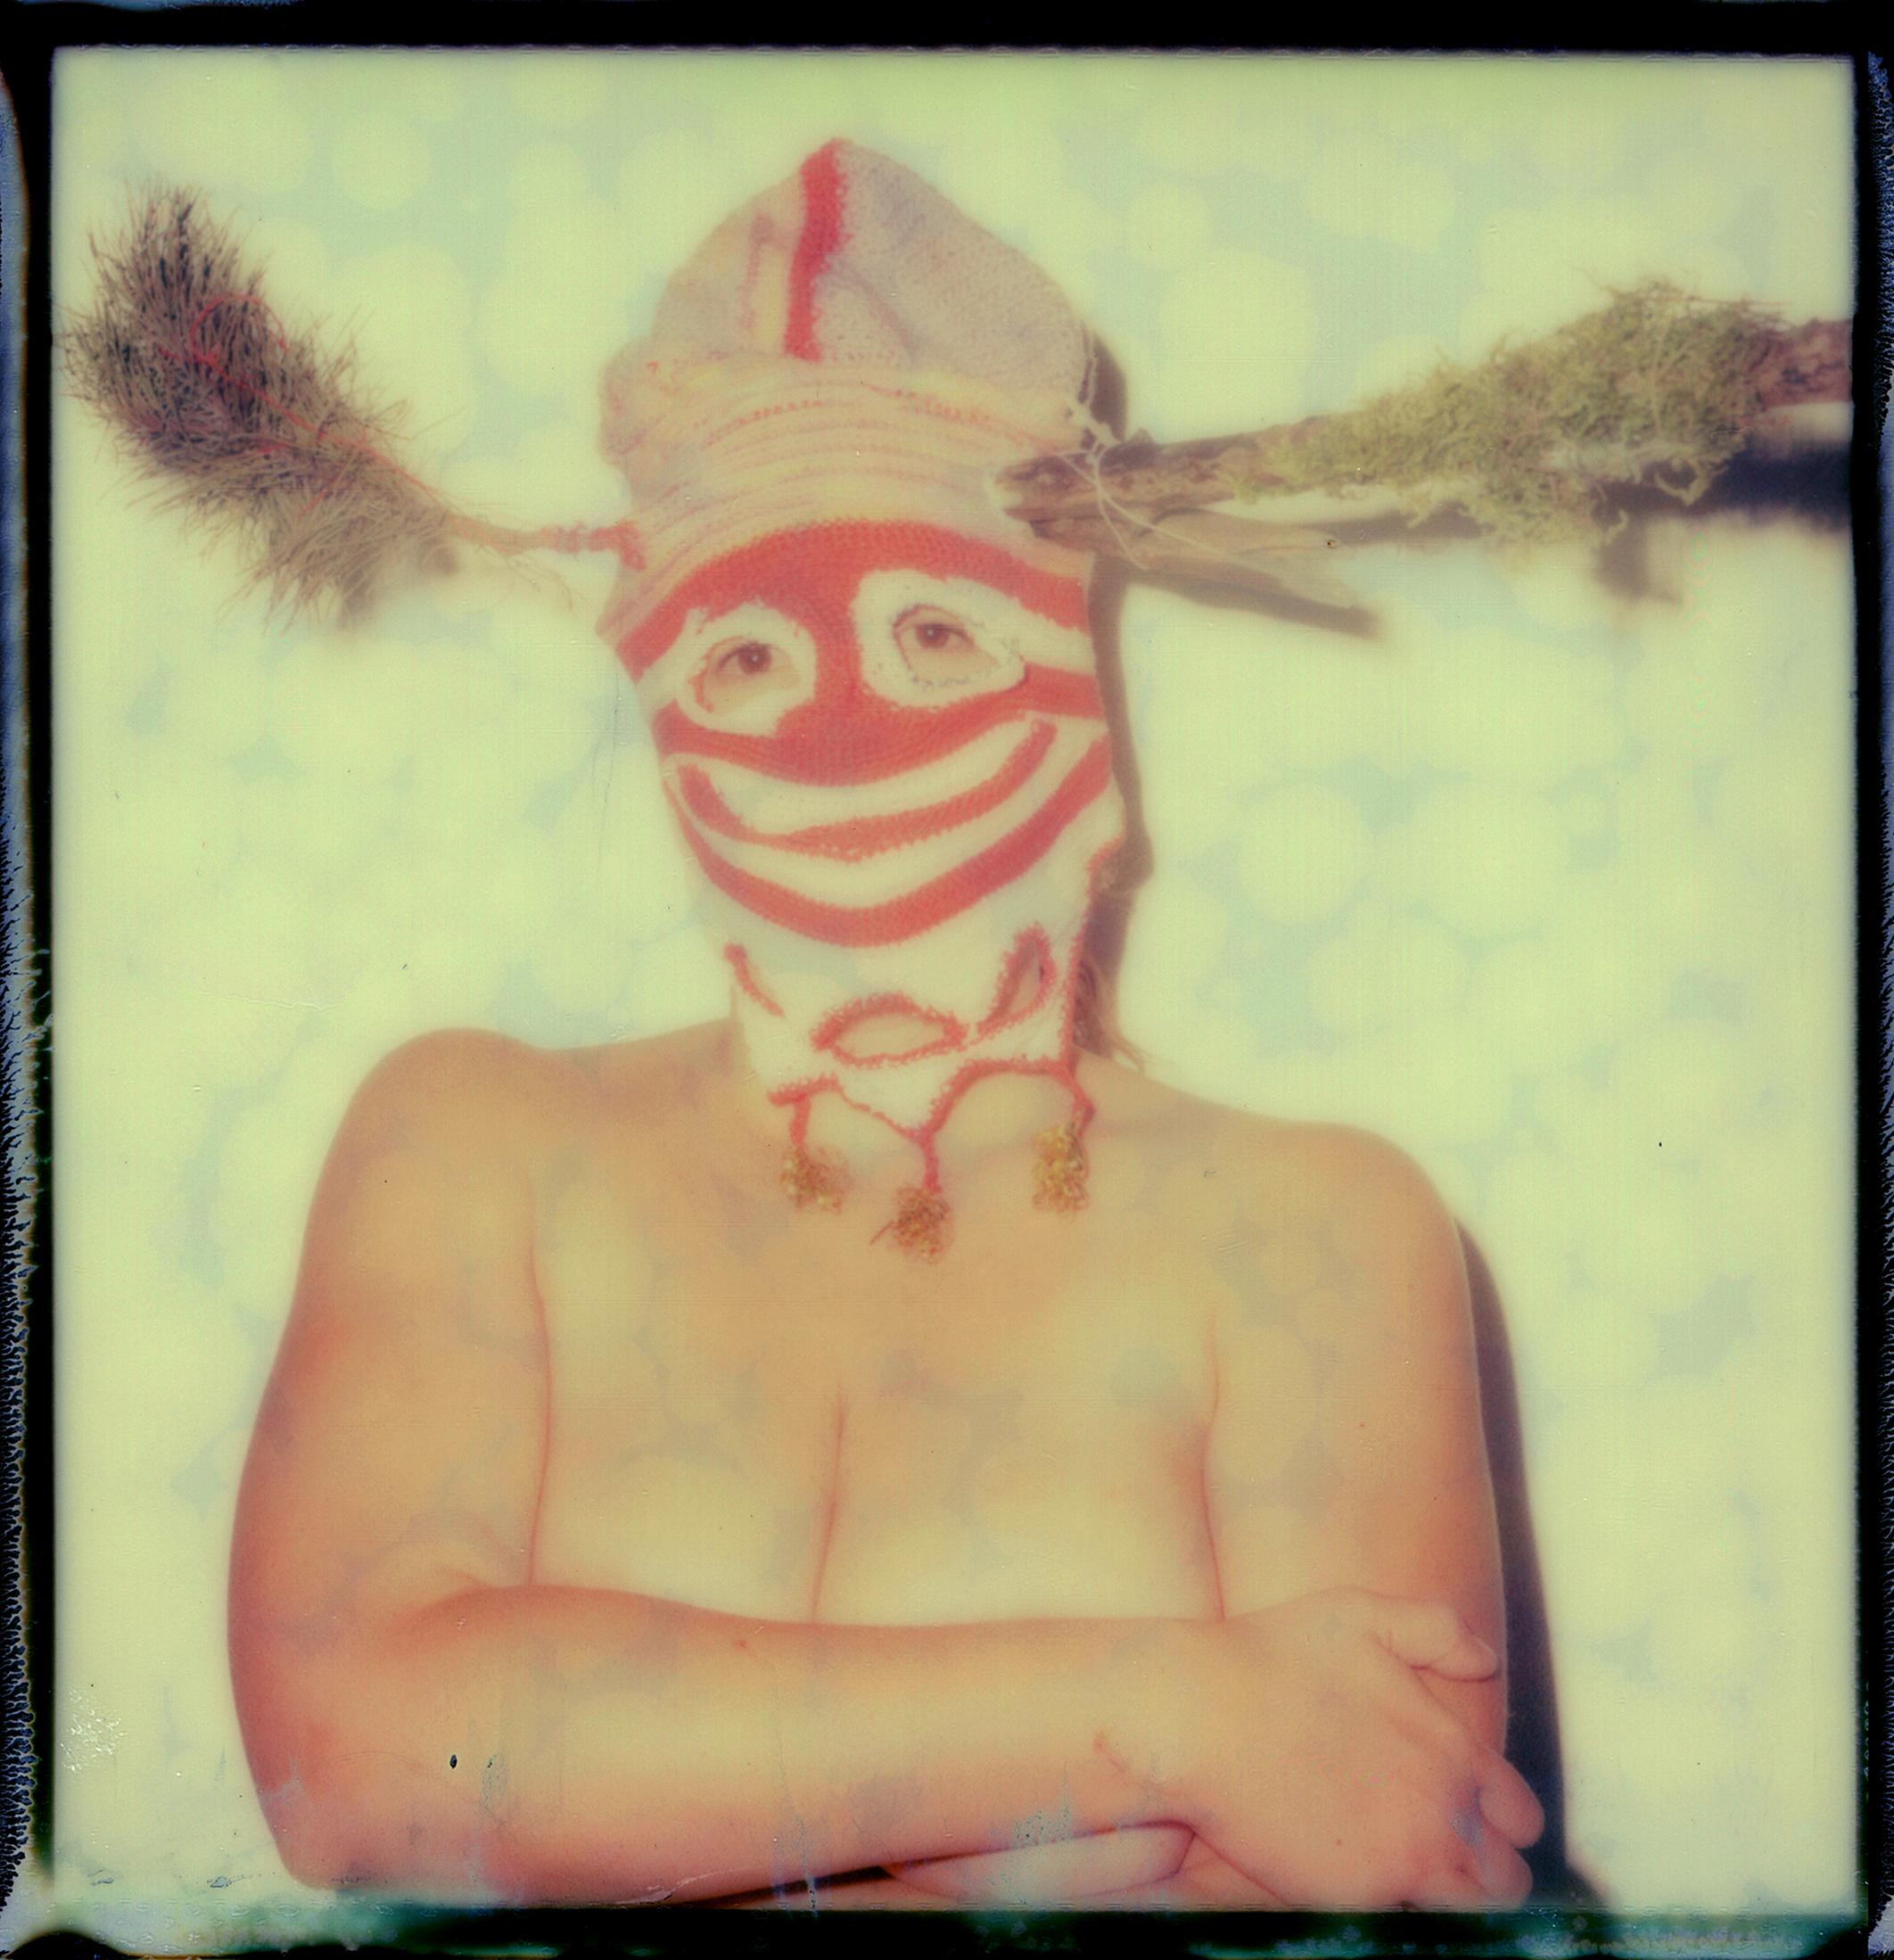 Mask - Contemporary, Conceptual, Polaroid, 21st Century, Portrait, Color - Photograph by Urizen Freaza